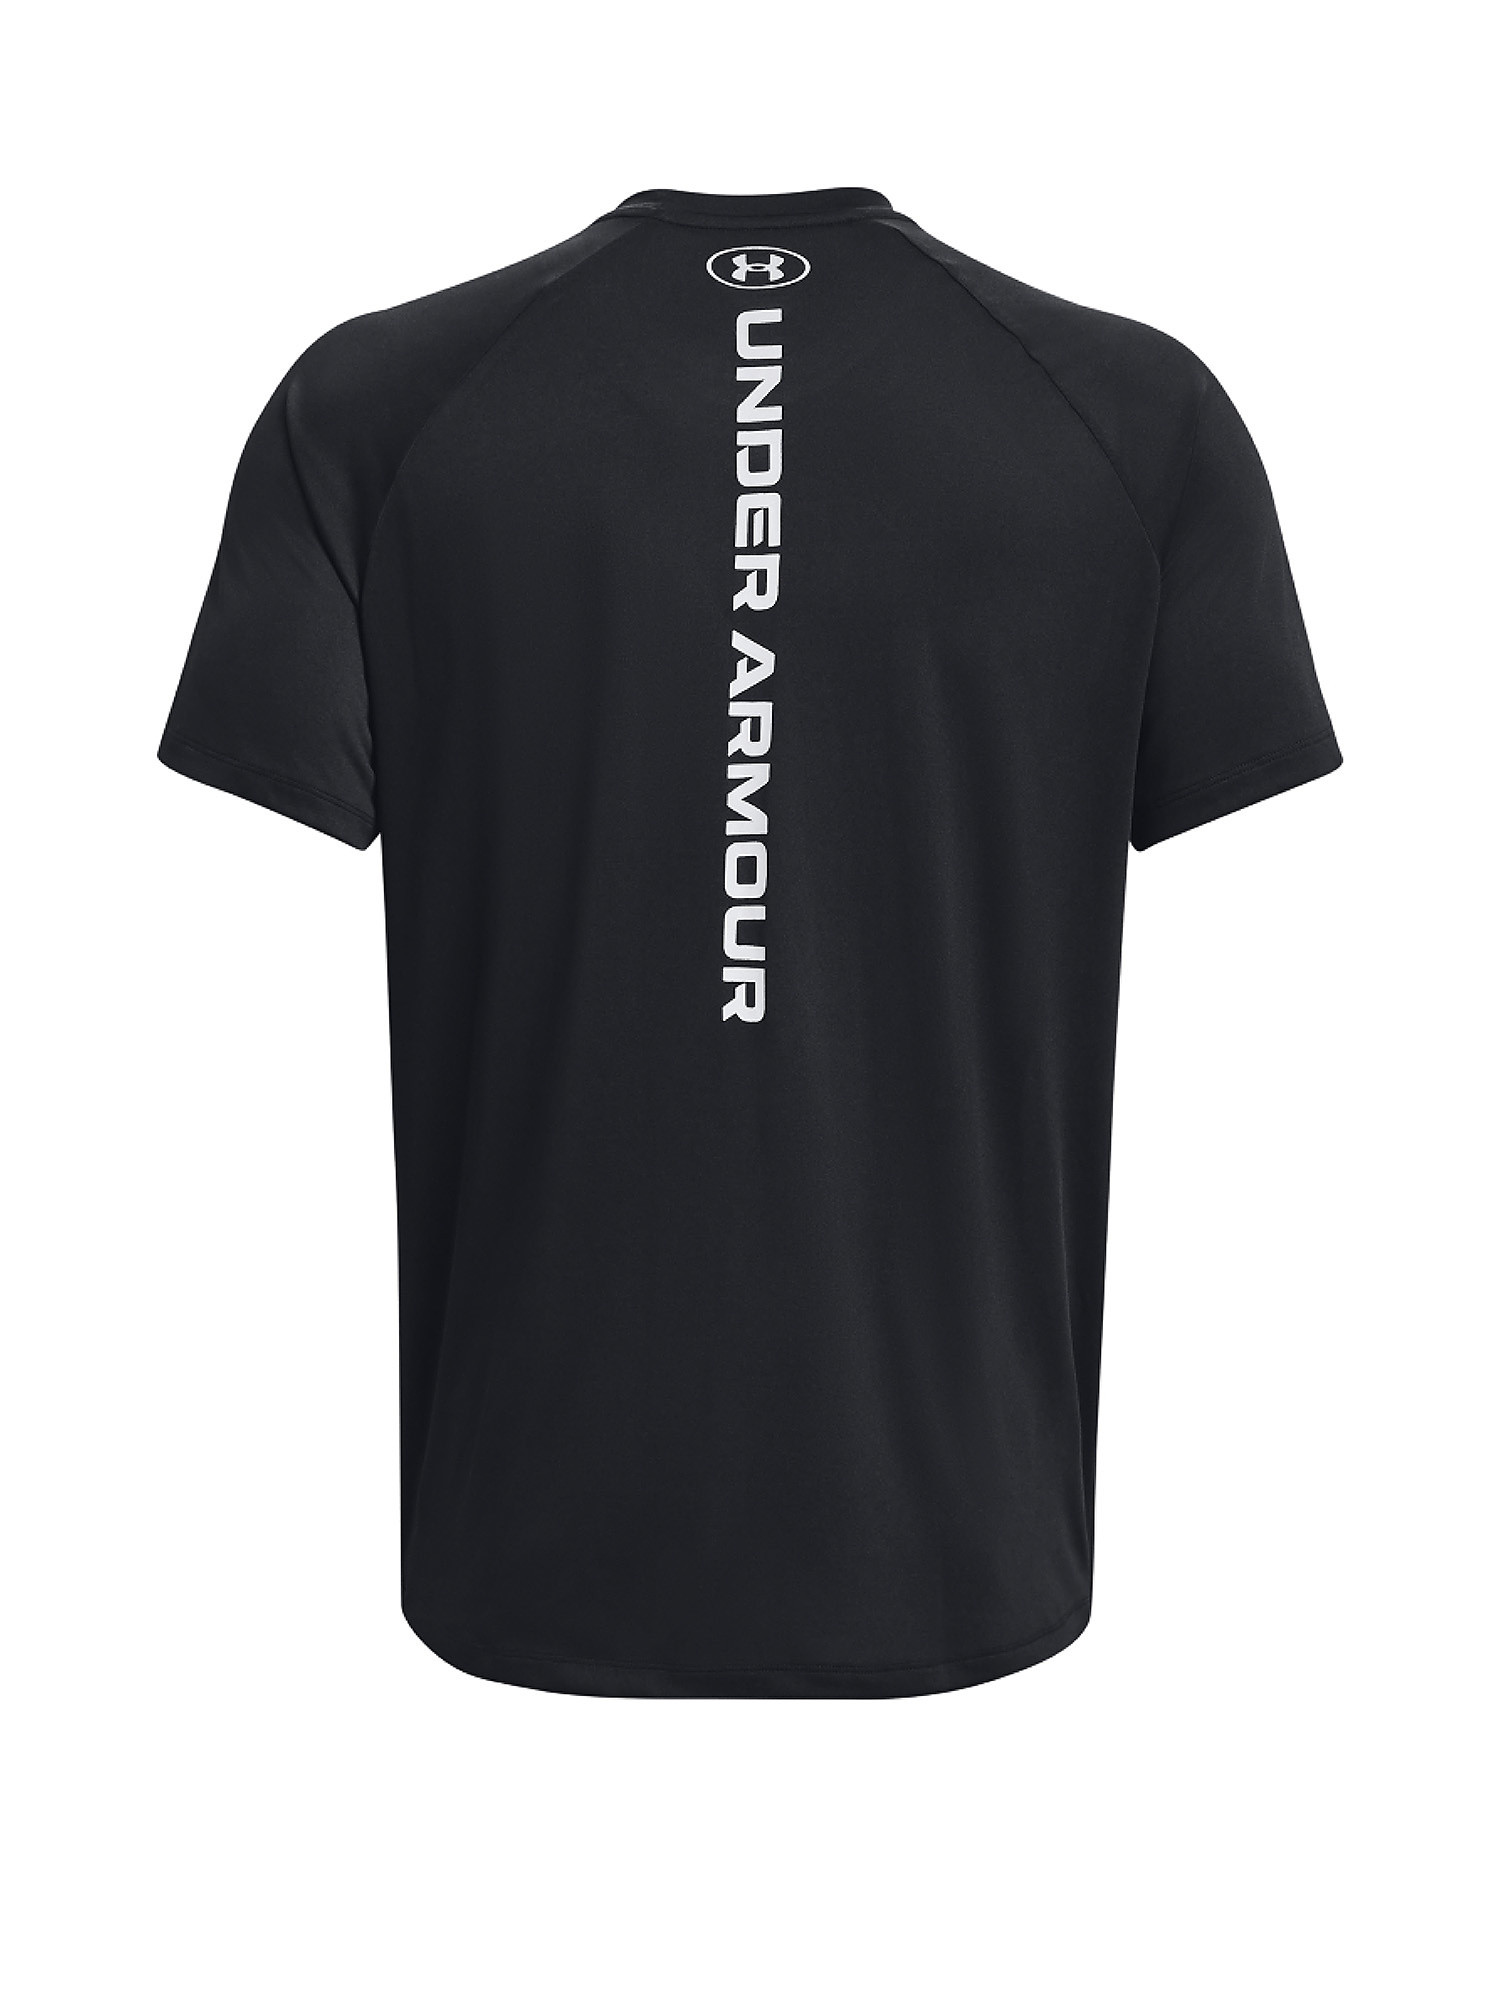 Under Armour - UA Tech™ Reflective Short Sleeve T-Shirt, Black, large image number 1